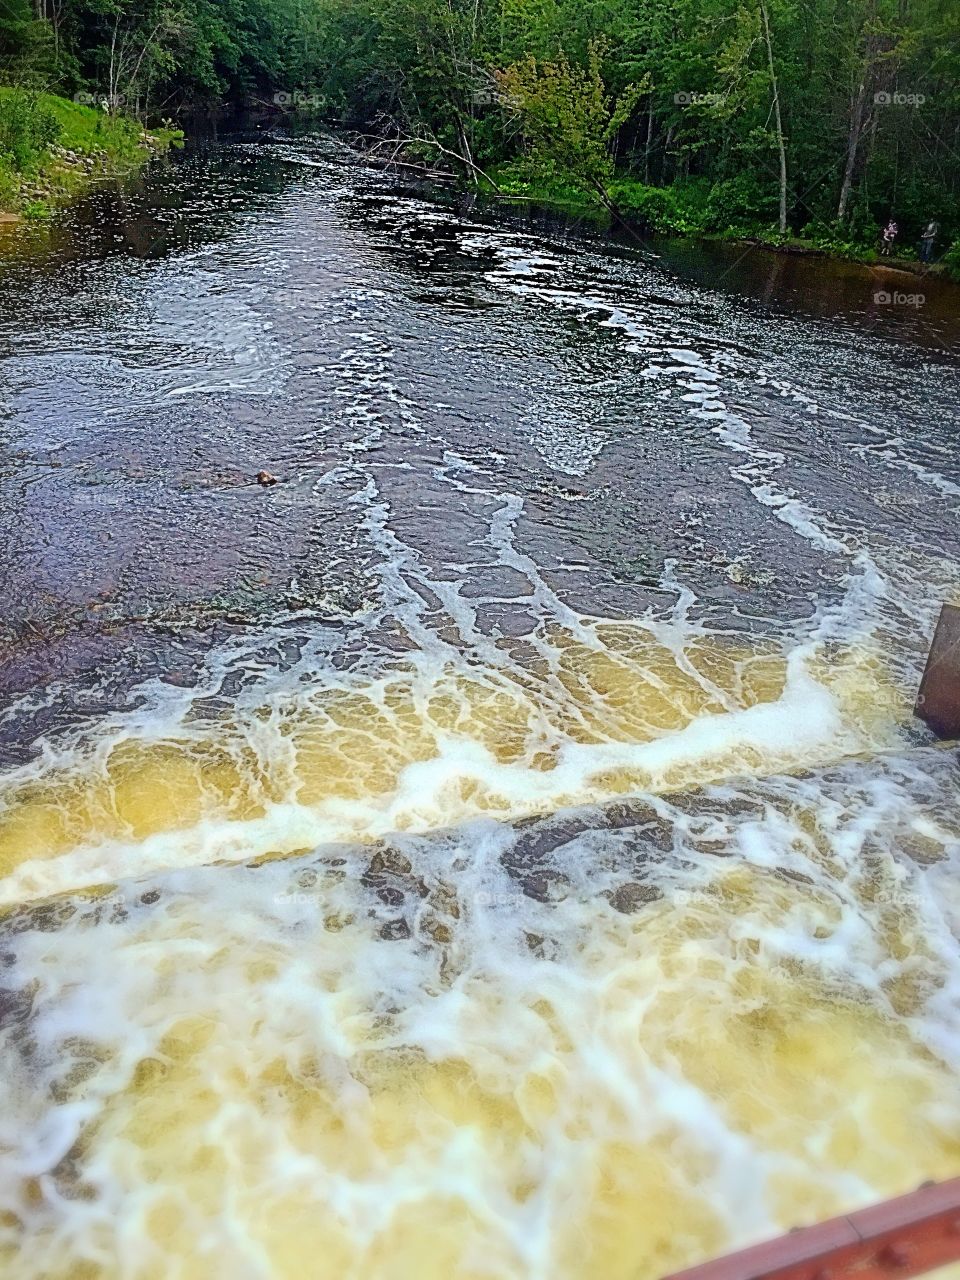 Rushing waters. Took a visit to a dam near Higgins Lake, Michigan